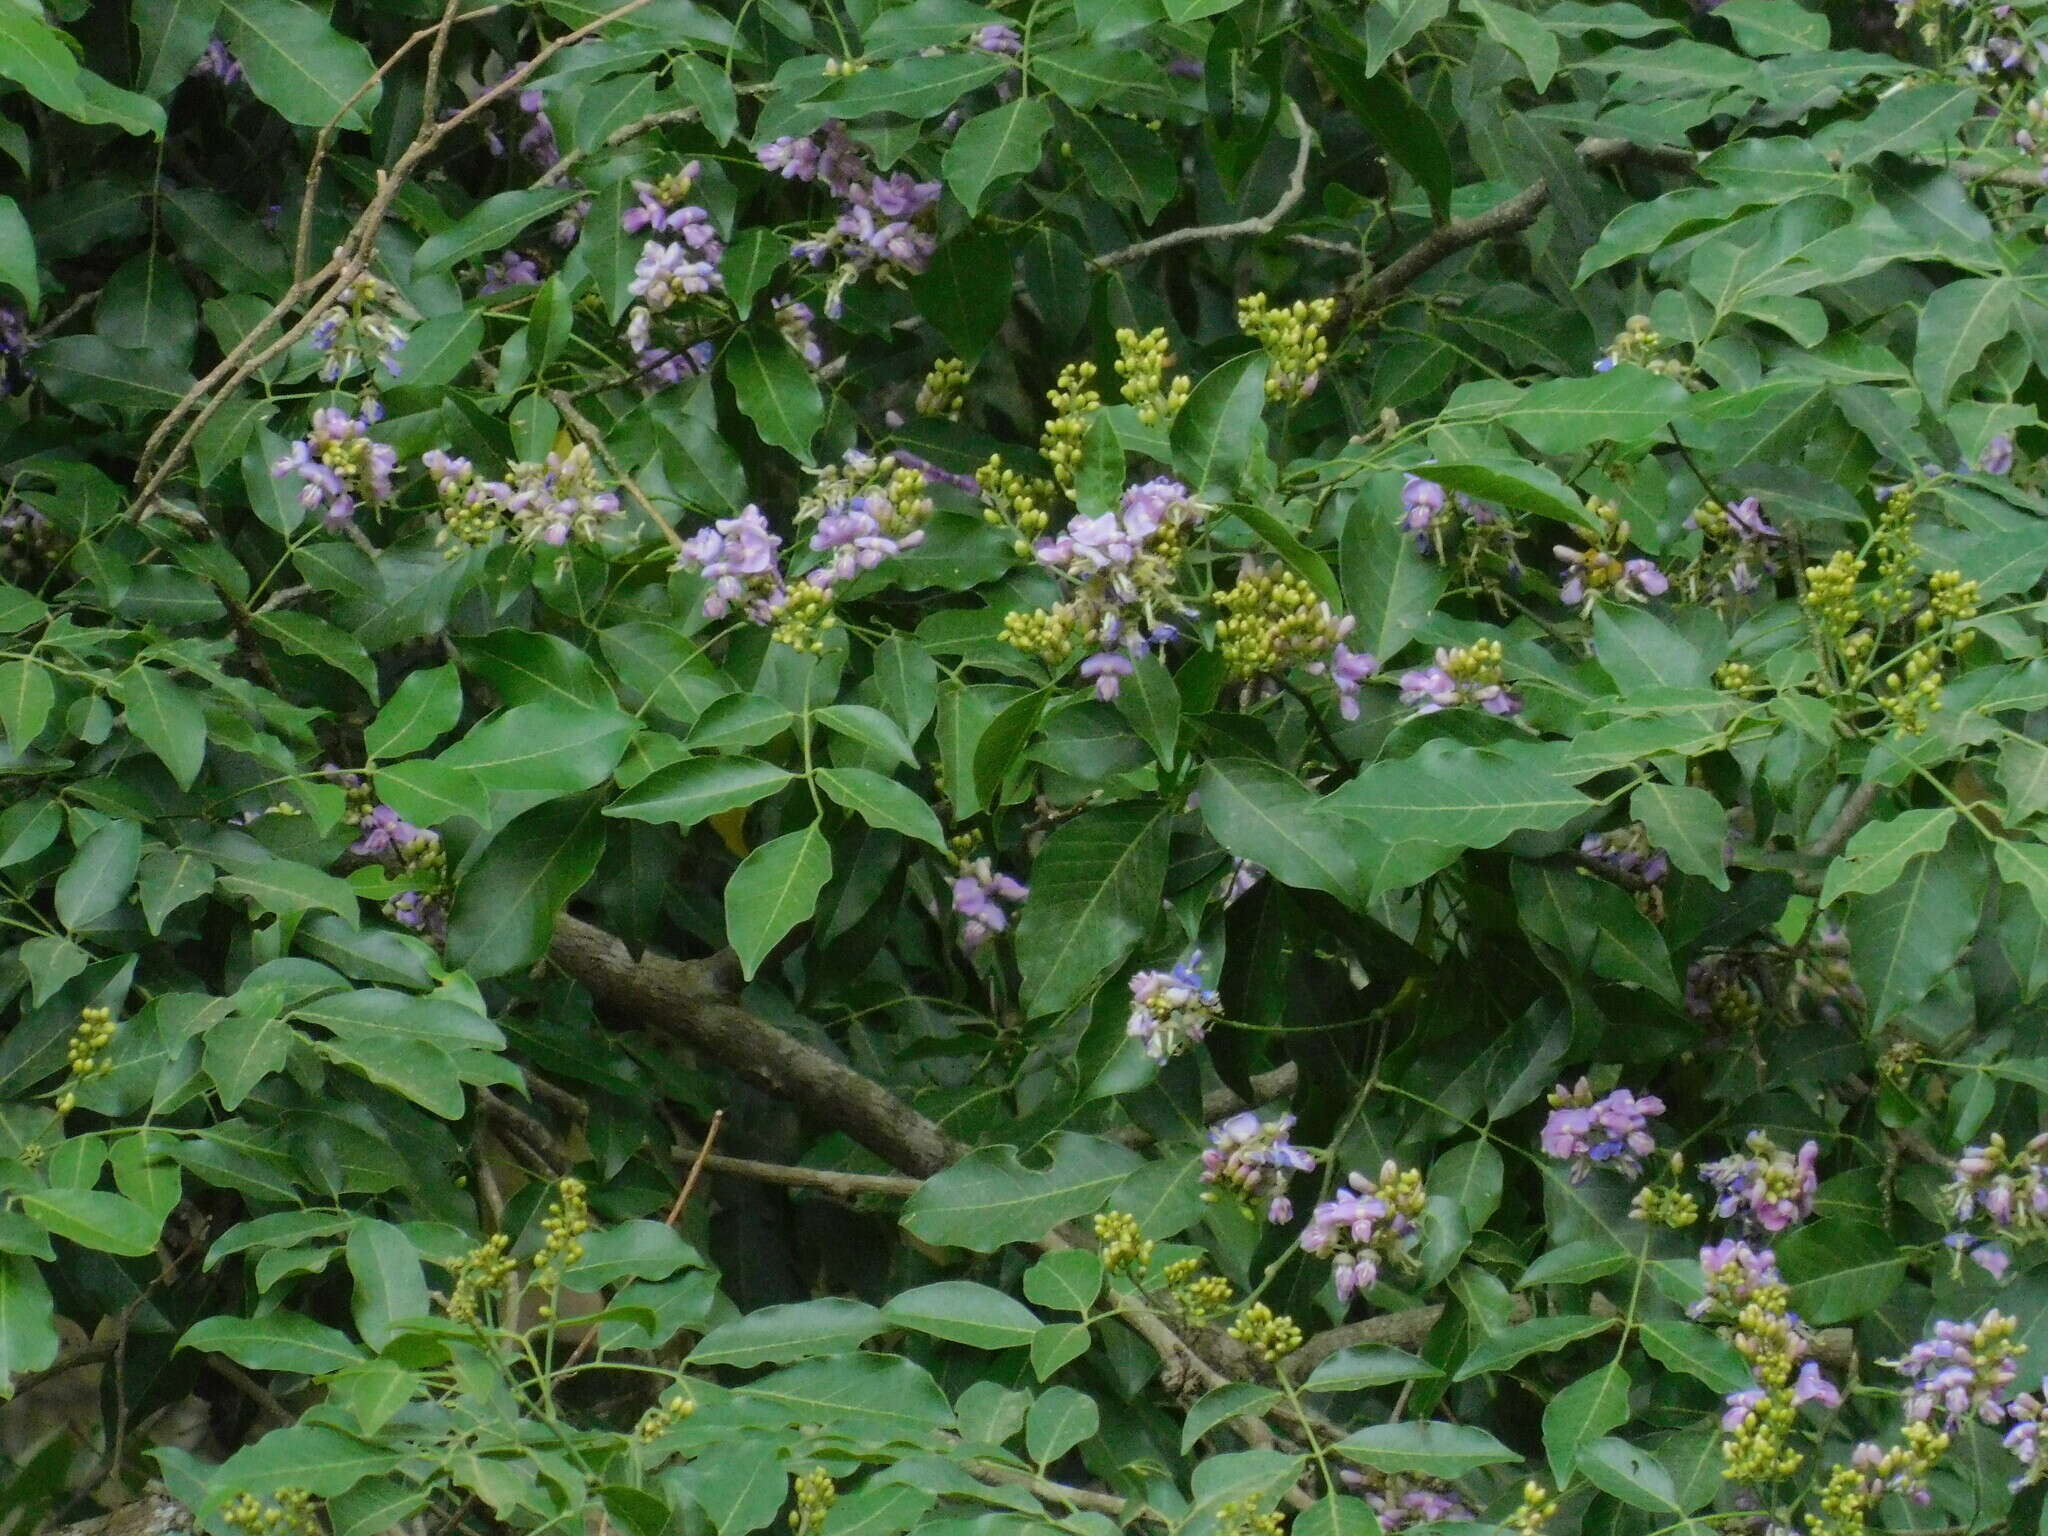 Image of Lonchocarpus lilloi (Hassl.) Burkart